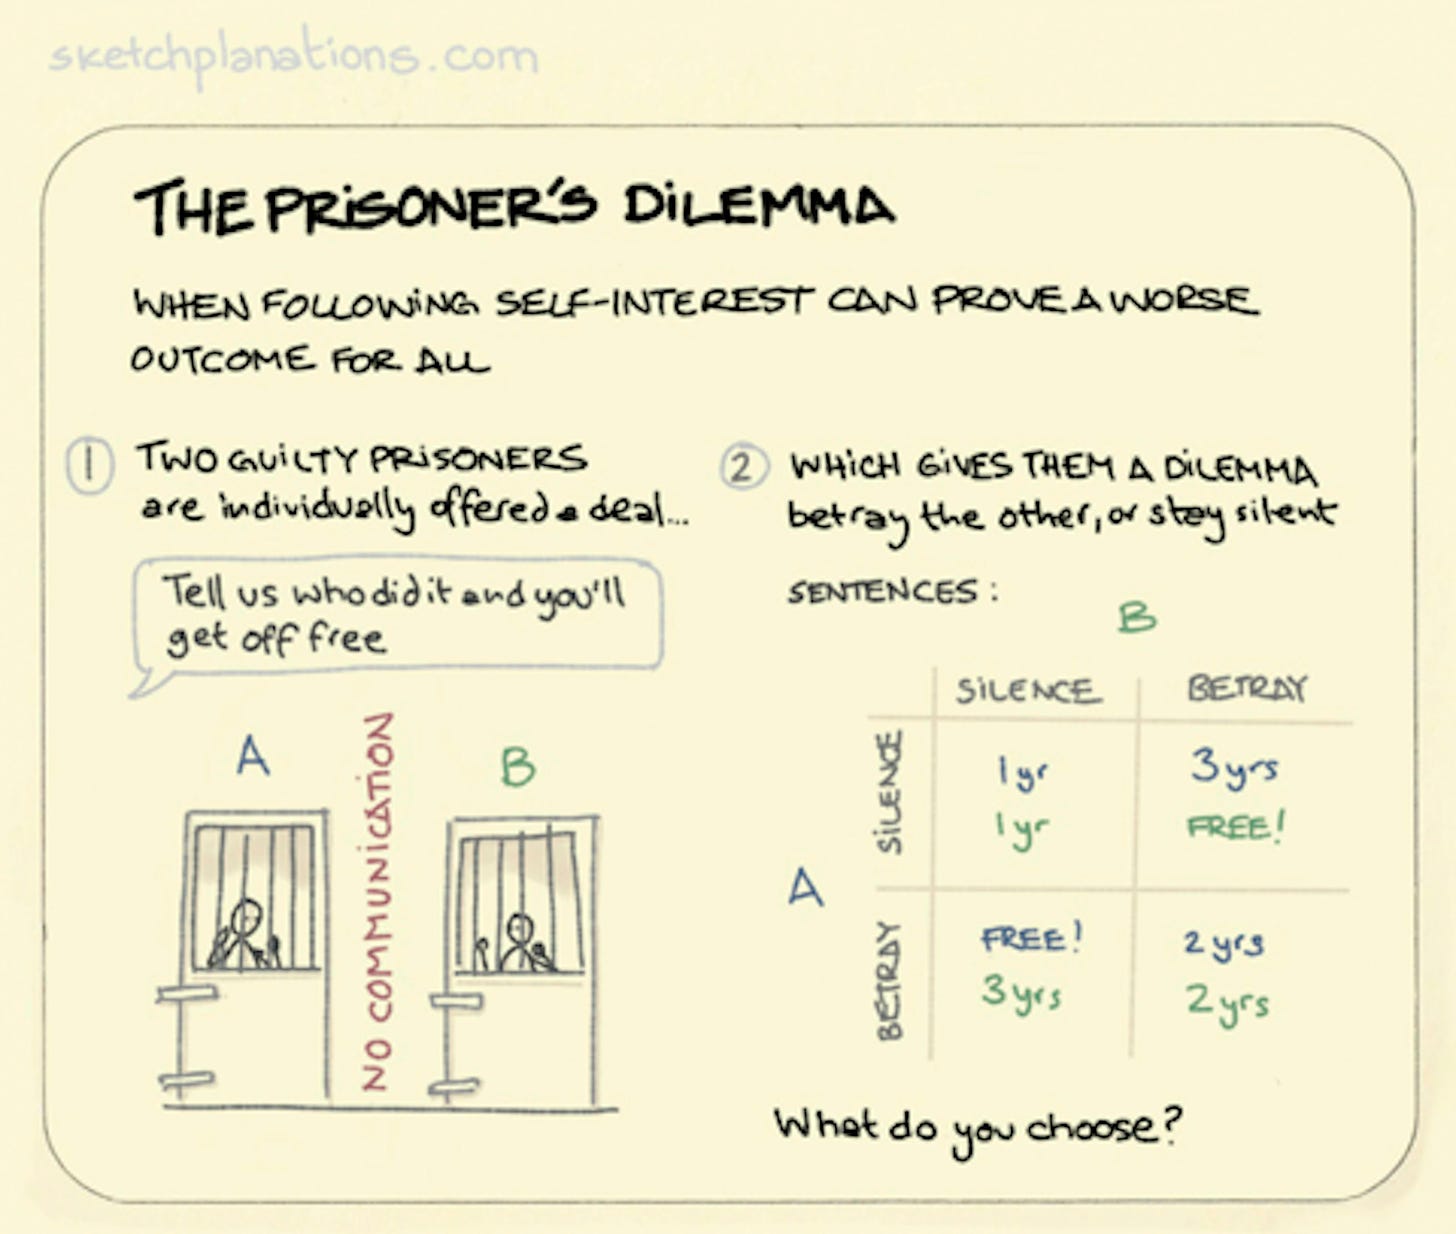 The prisoner’s dilemma - Sketchplanations